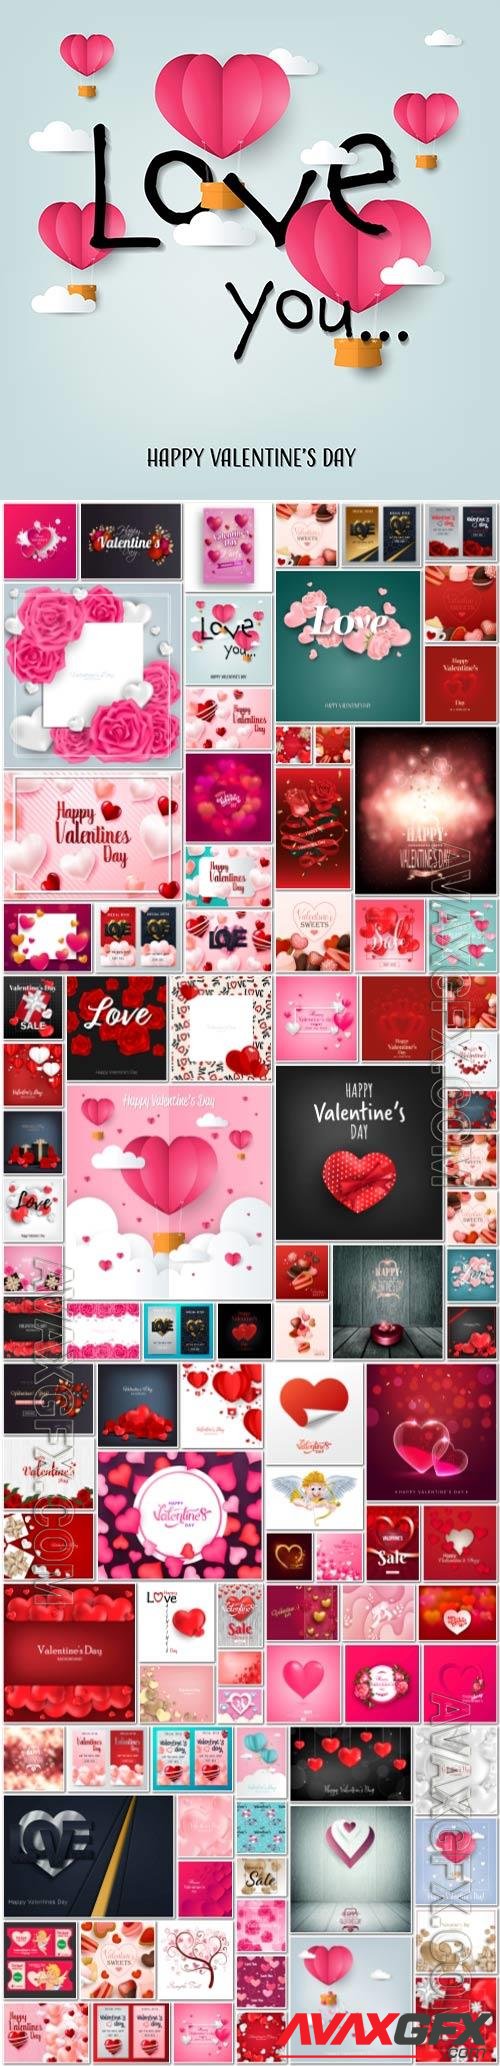 100 Bundle Happy Valentines Day, love, romance, hearts in vector vol 4